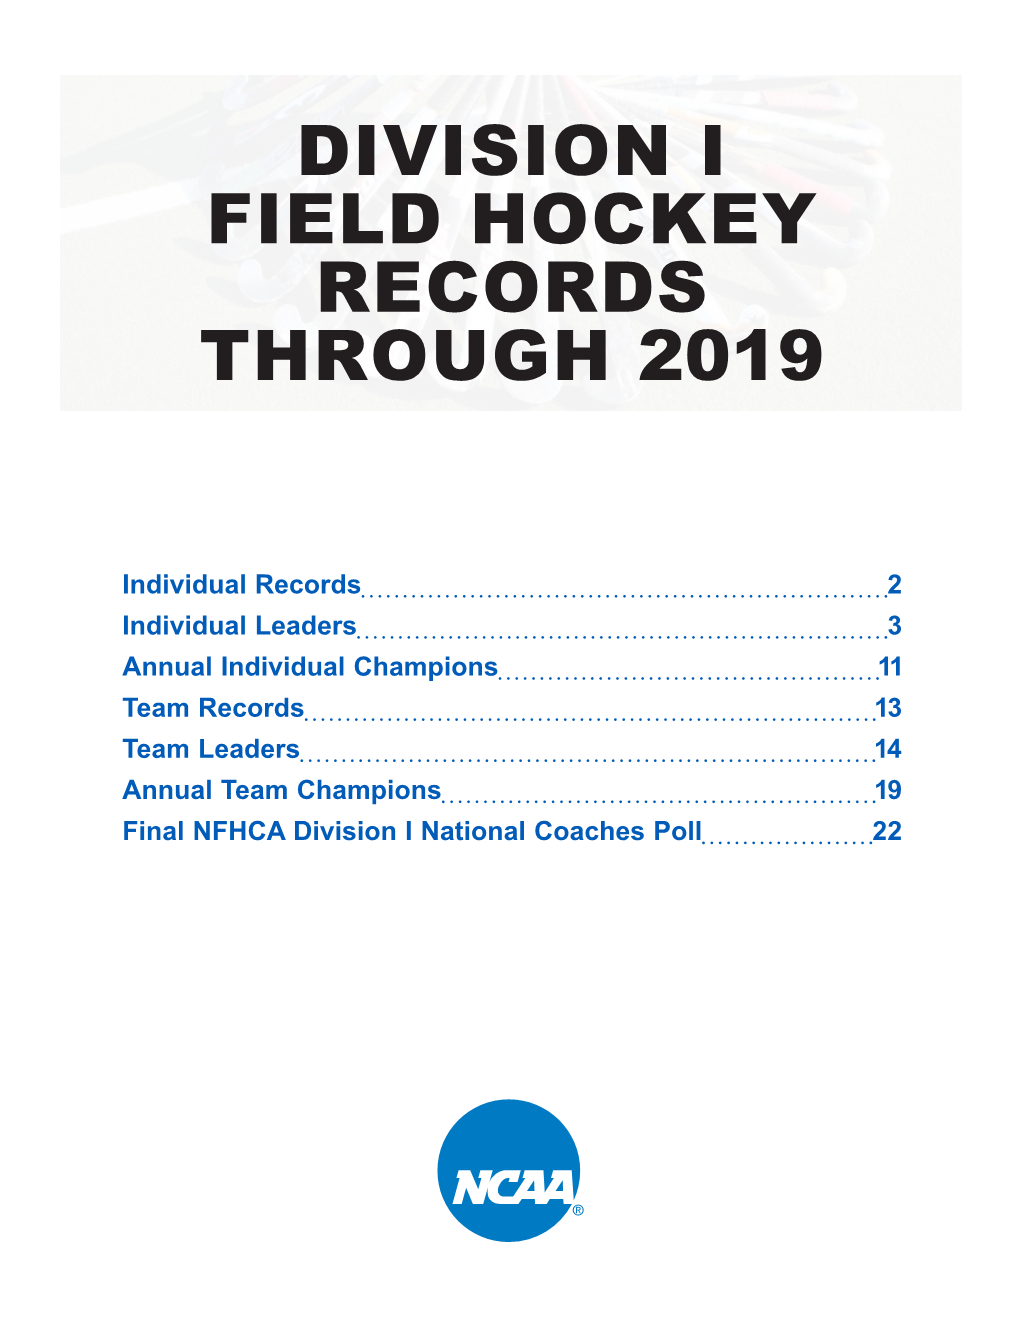 Division I Field Hockey Records Through 2019